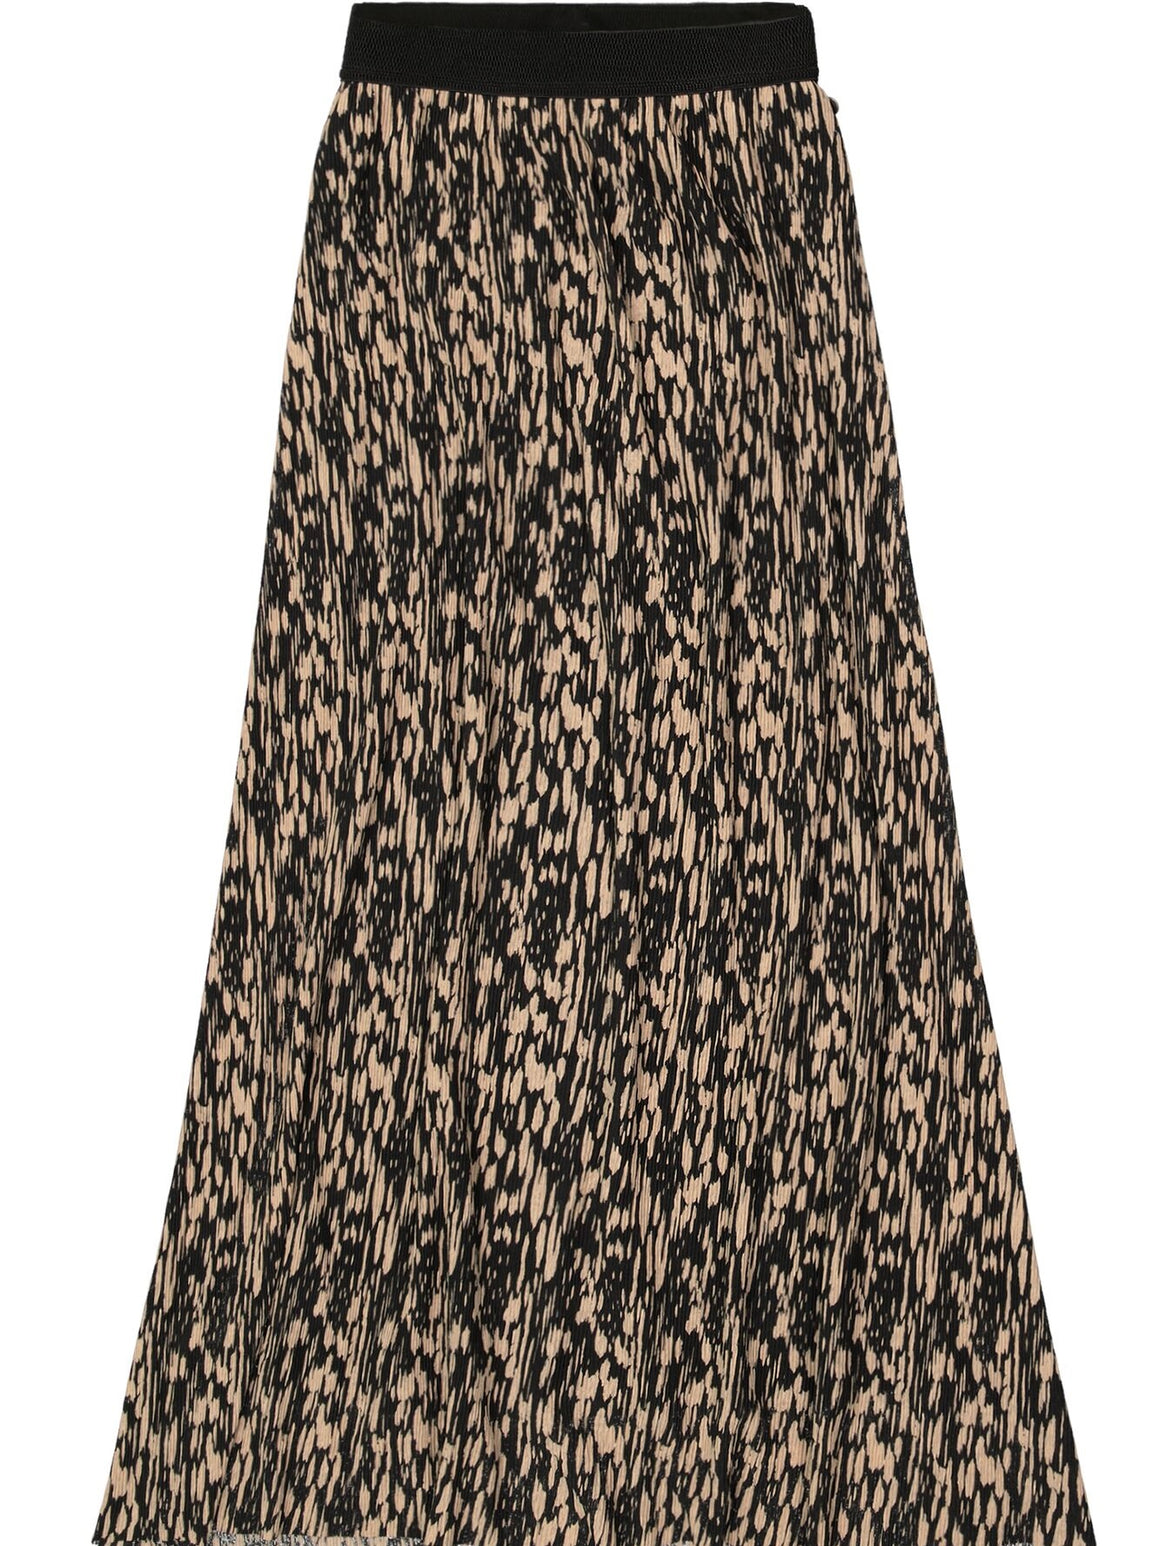 Garcia Skirt-Black Print | NZ womens clothing | Trio Boutique Geraldine